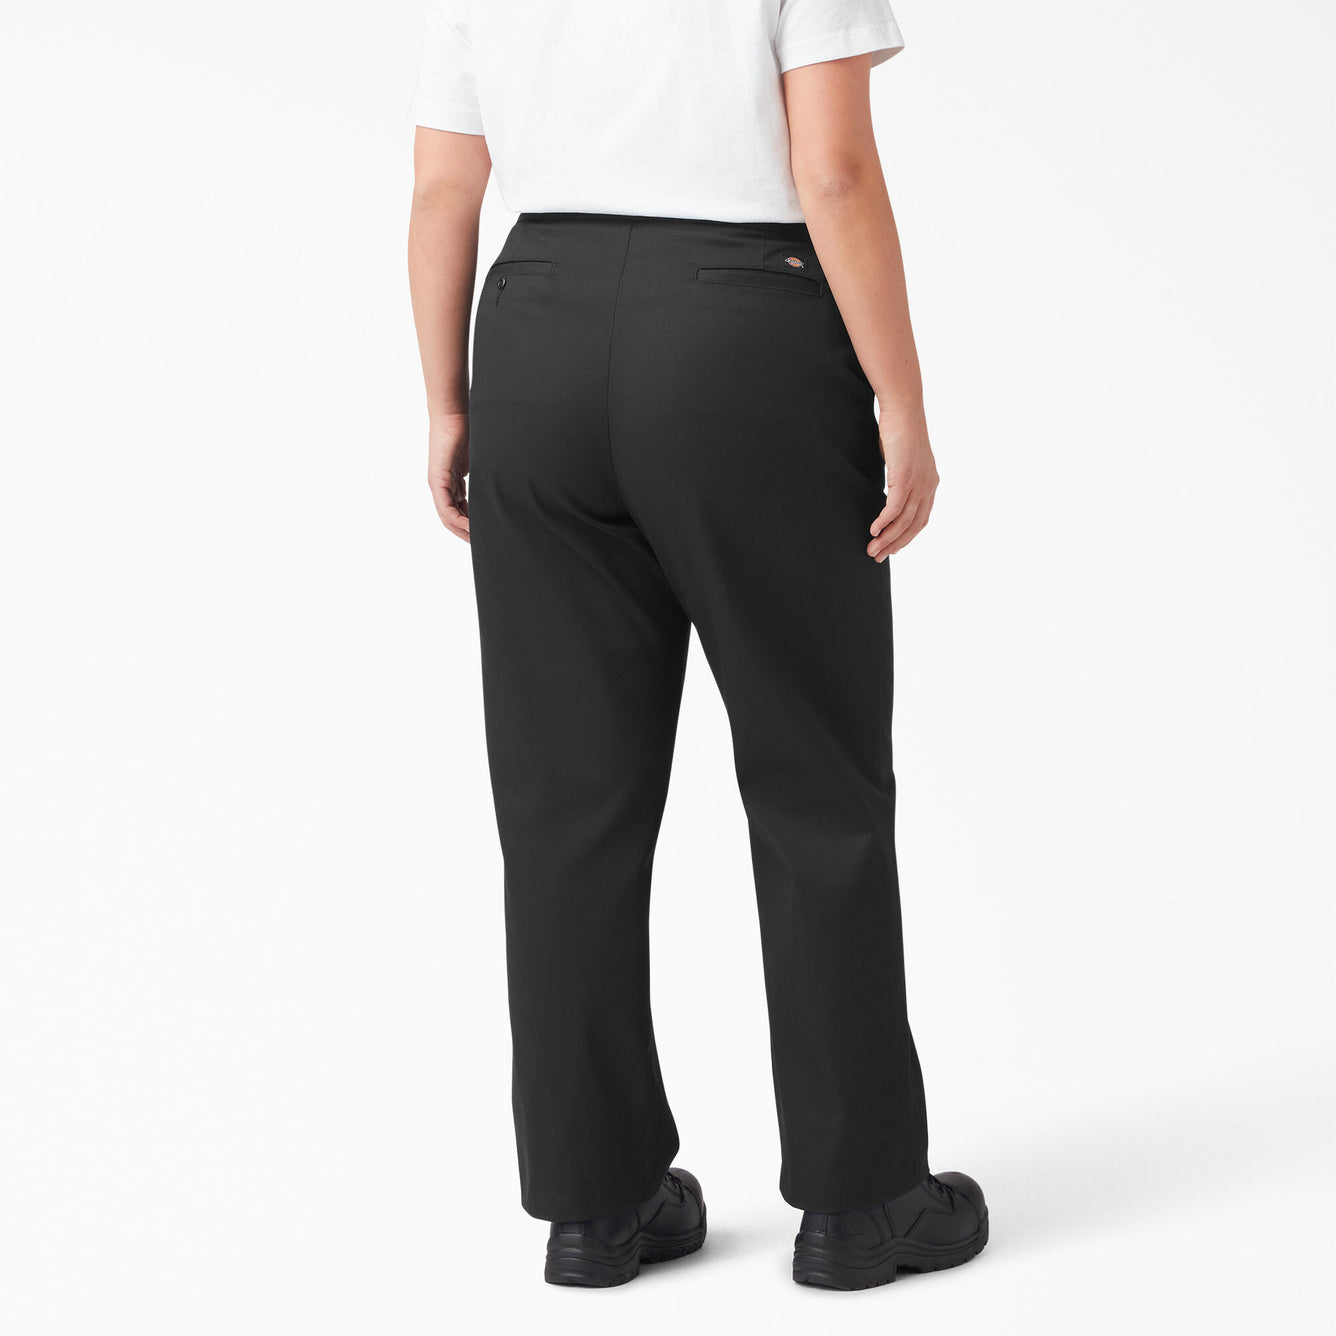 Dickies  -  Made to Fit the Curvy Girl - Women's Plus Original 874® Work Pants